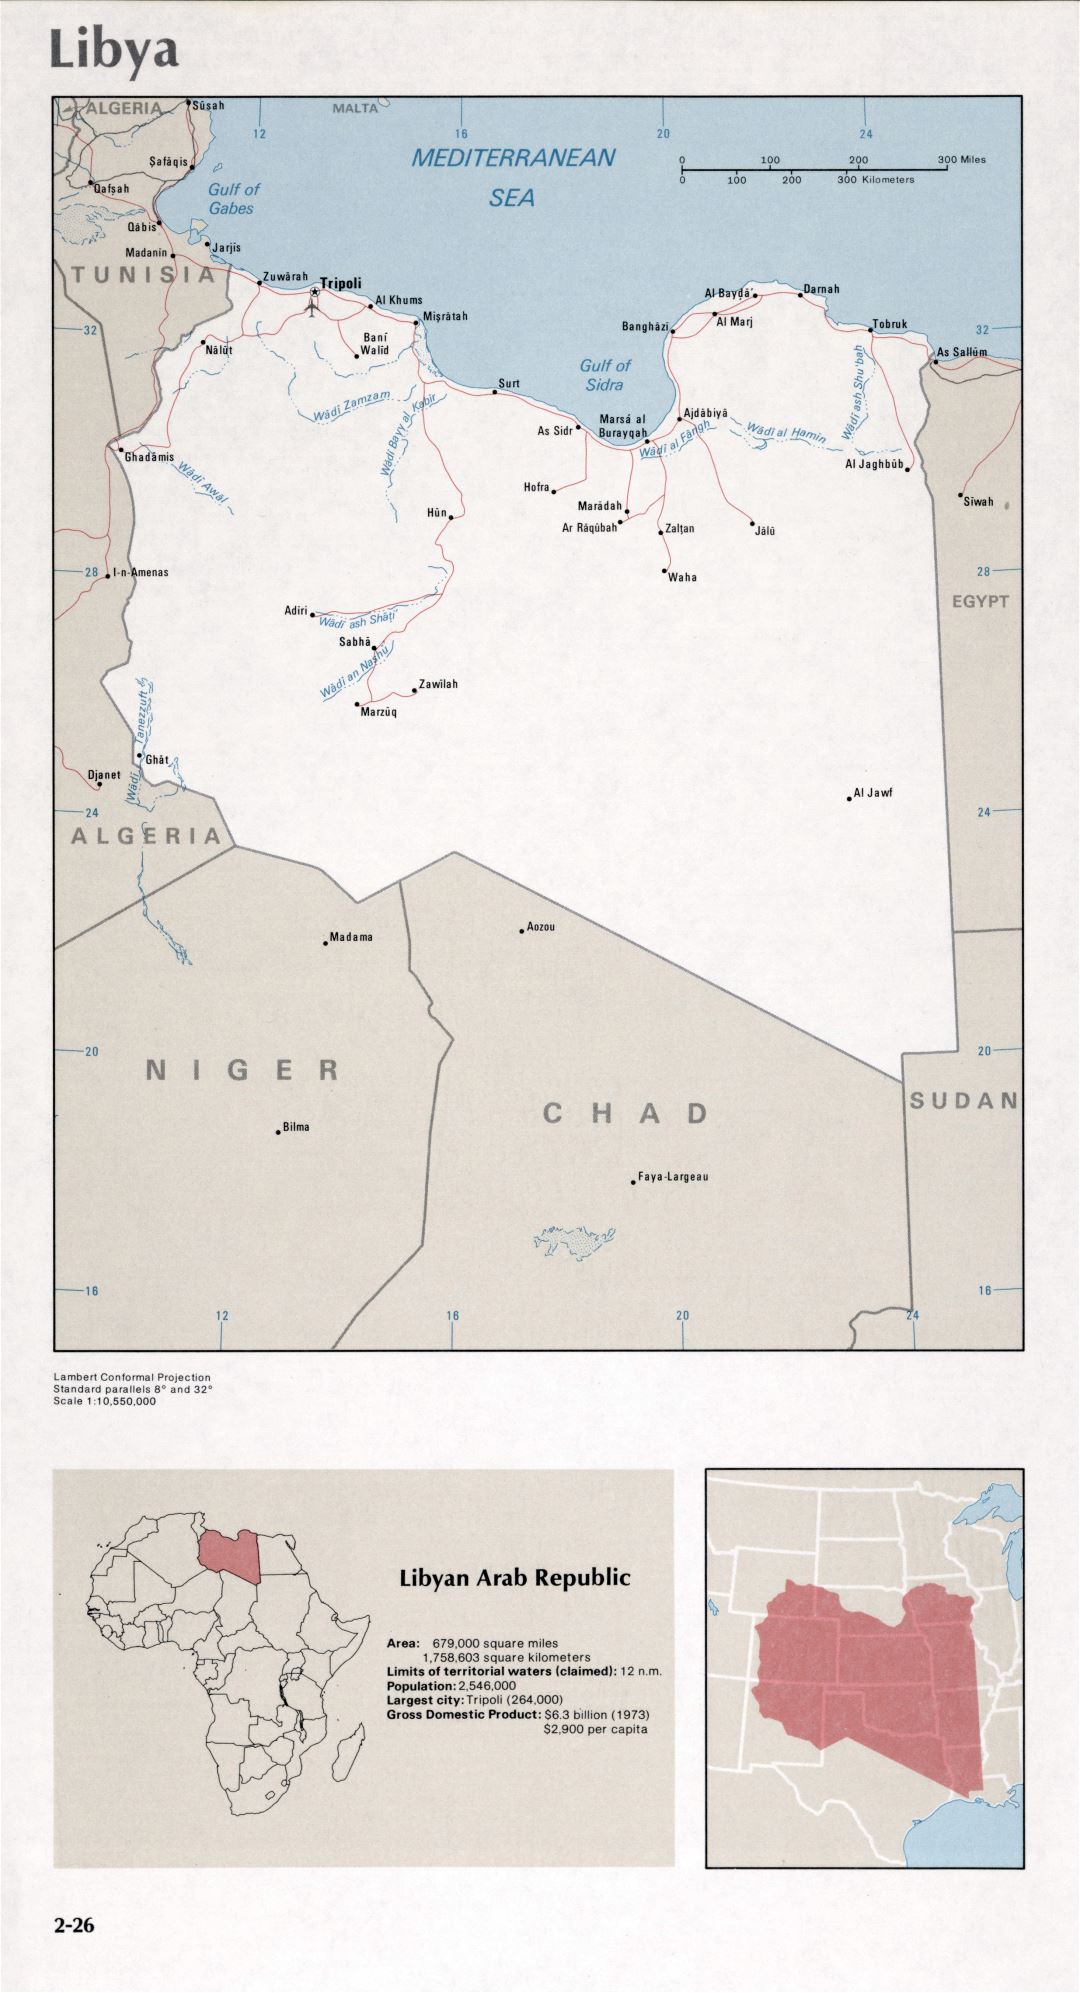 Map of Libya (2-26)